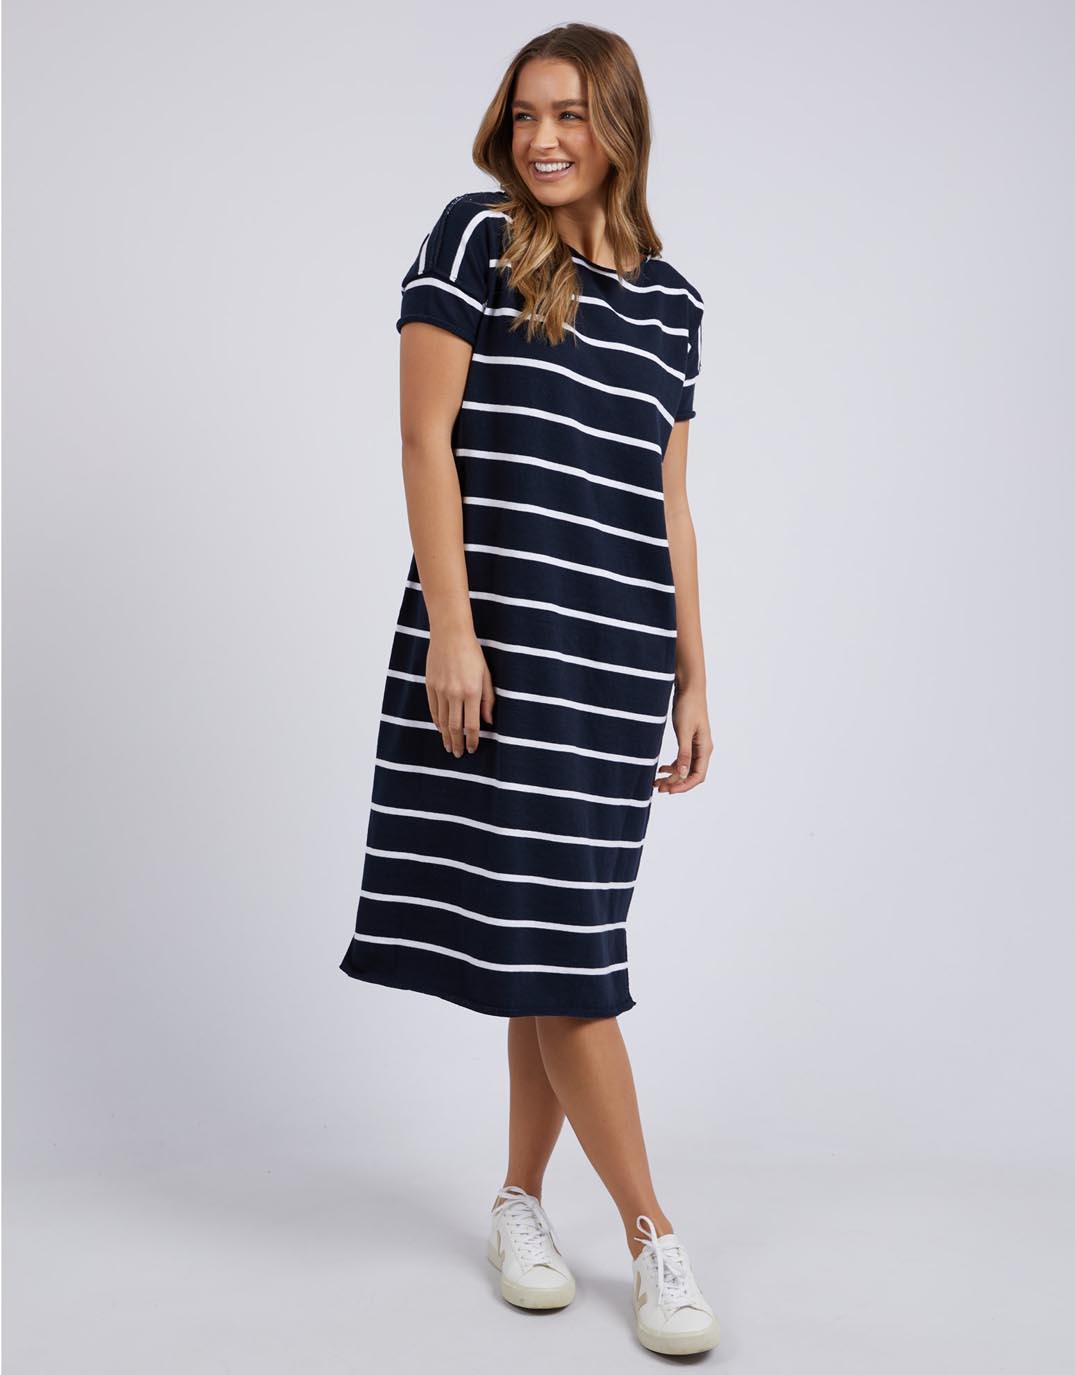 Foxwood - Margot Stripe Knit Dress - Navy & White Stripe - paulaglazebrook Dresses